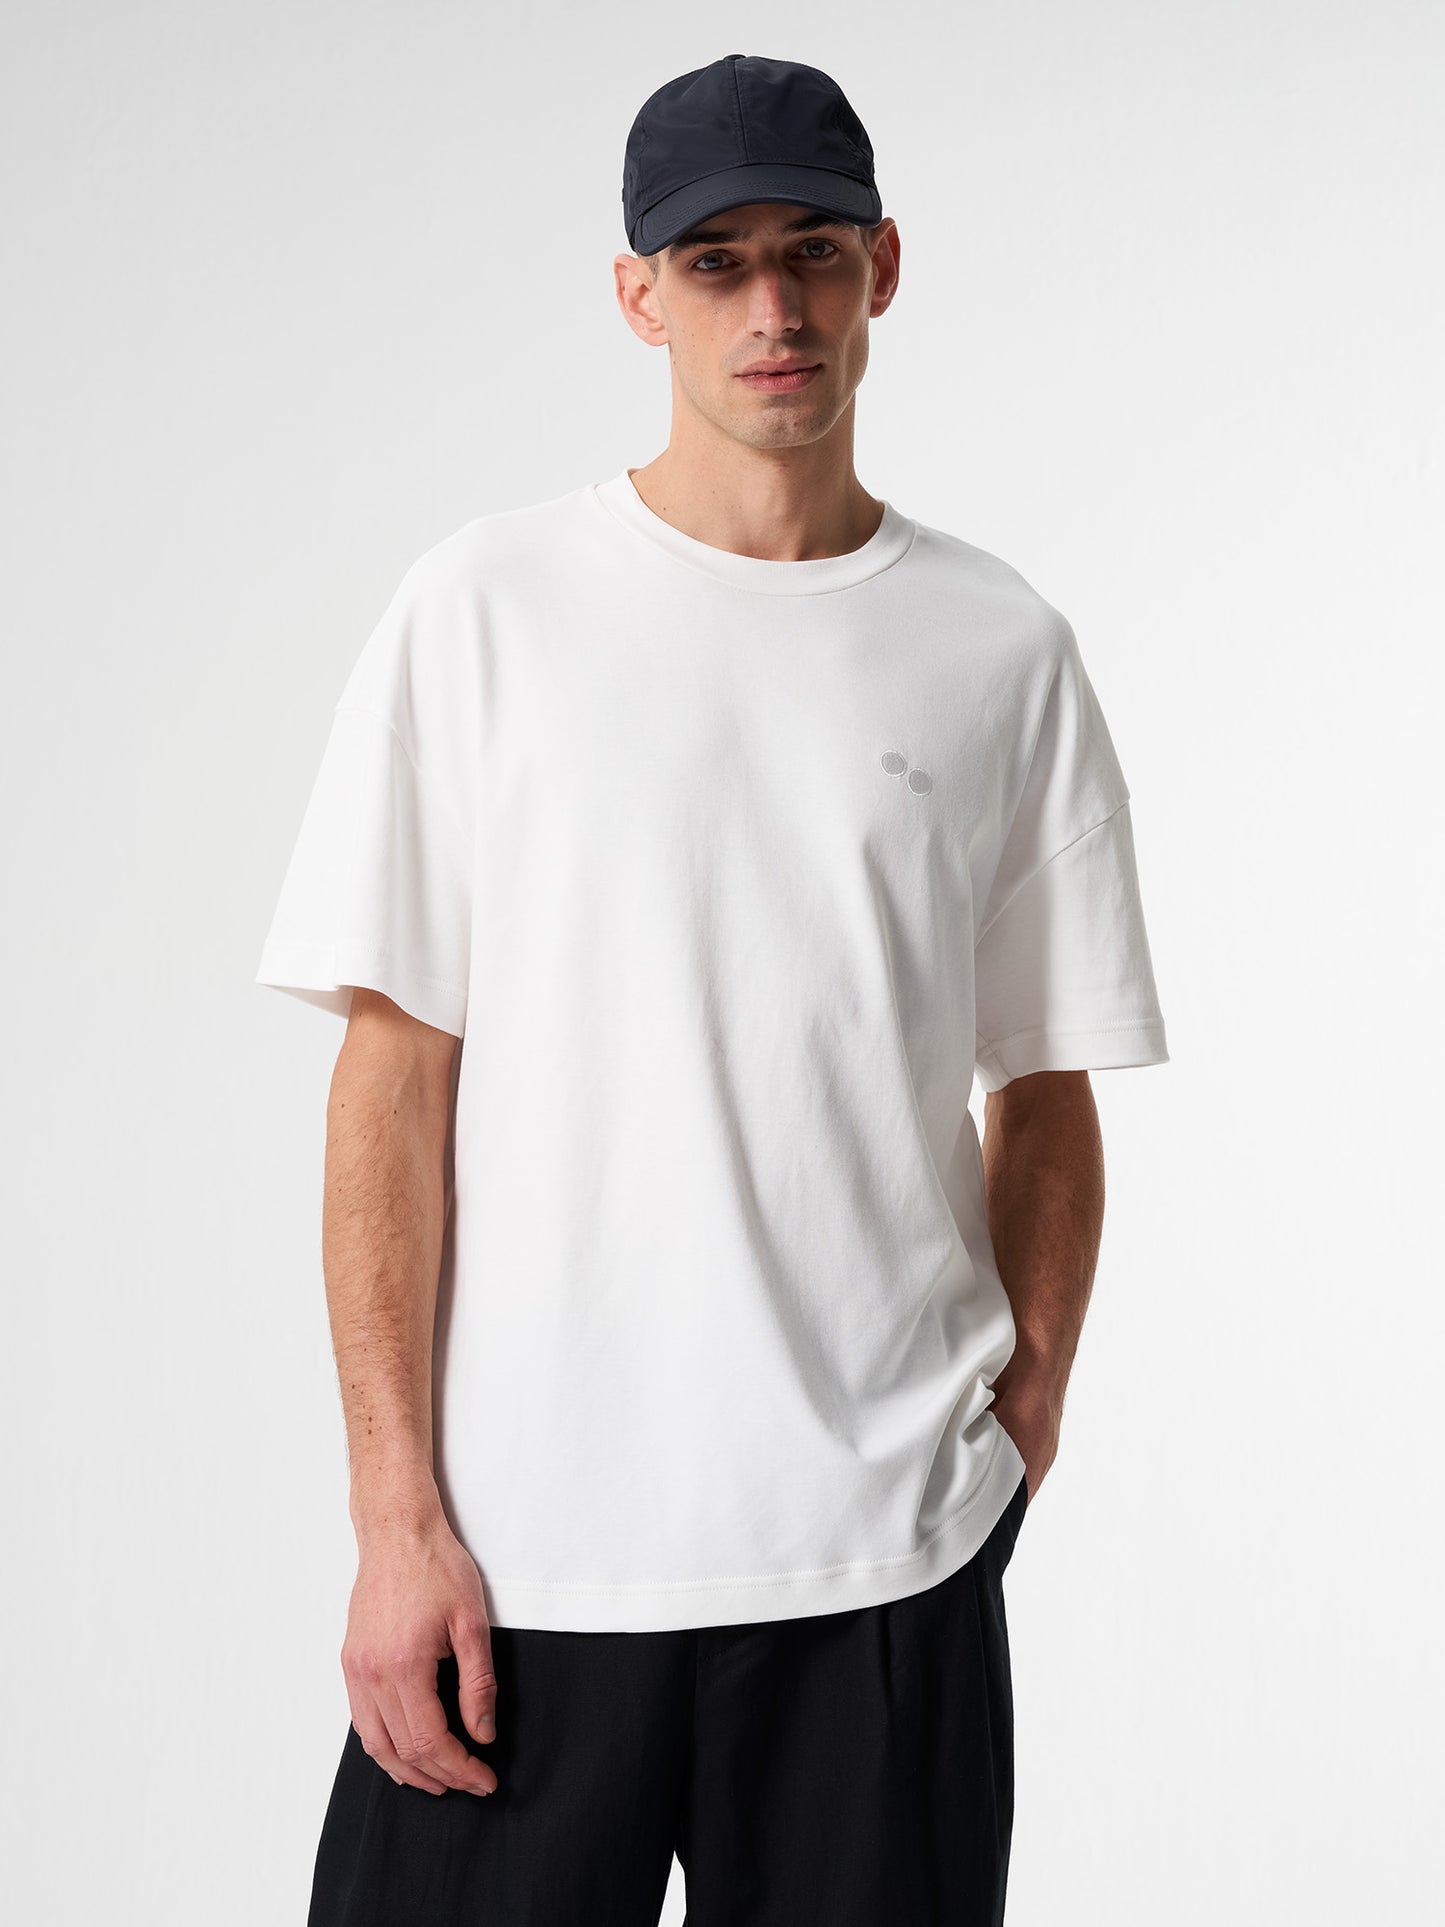 pinqponq-Tshirt-Unisex-Circles-Dandelion-White-model-front